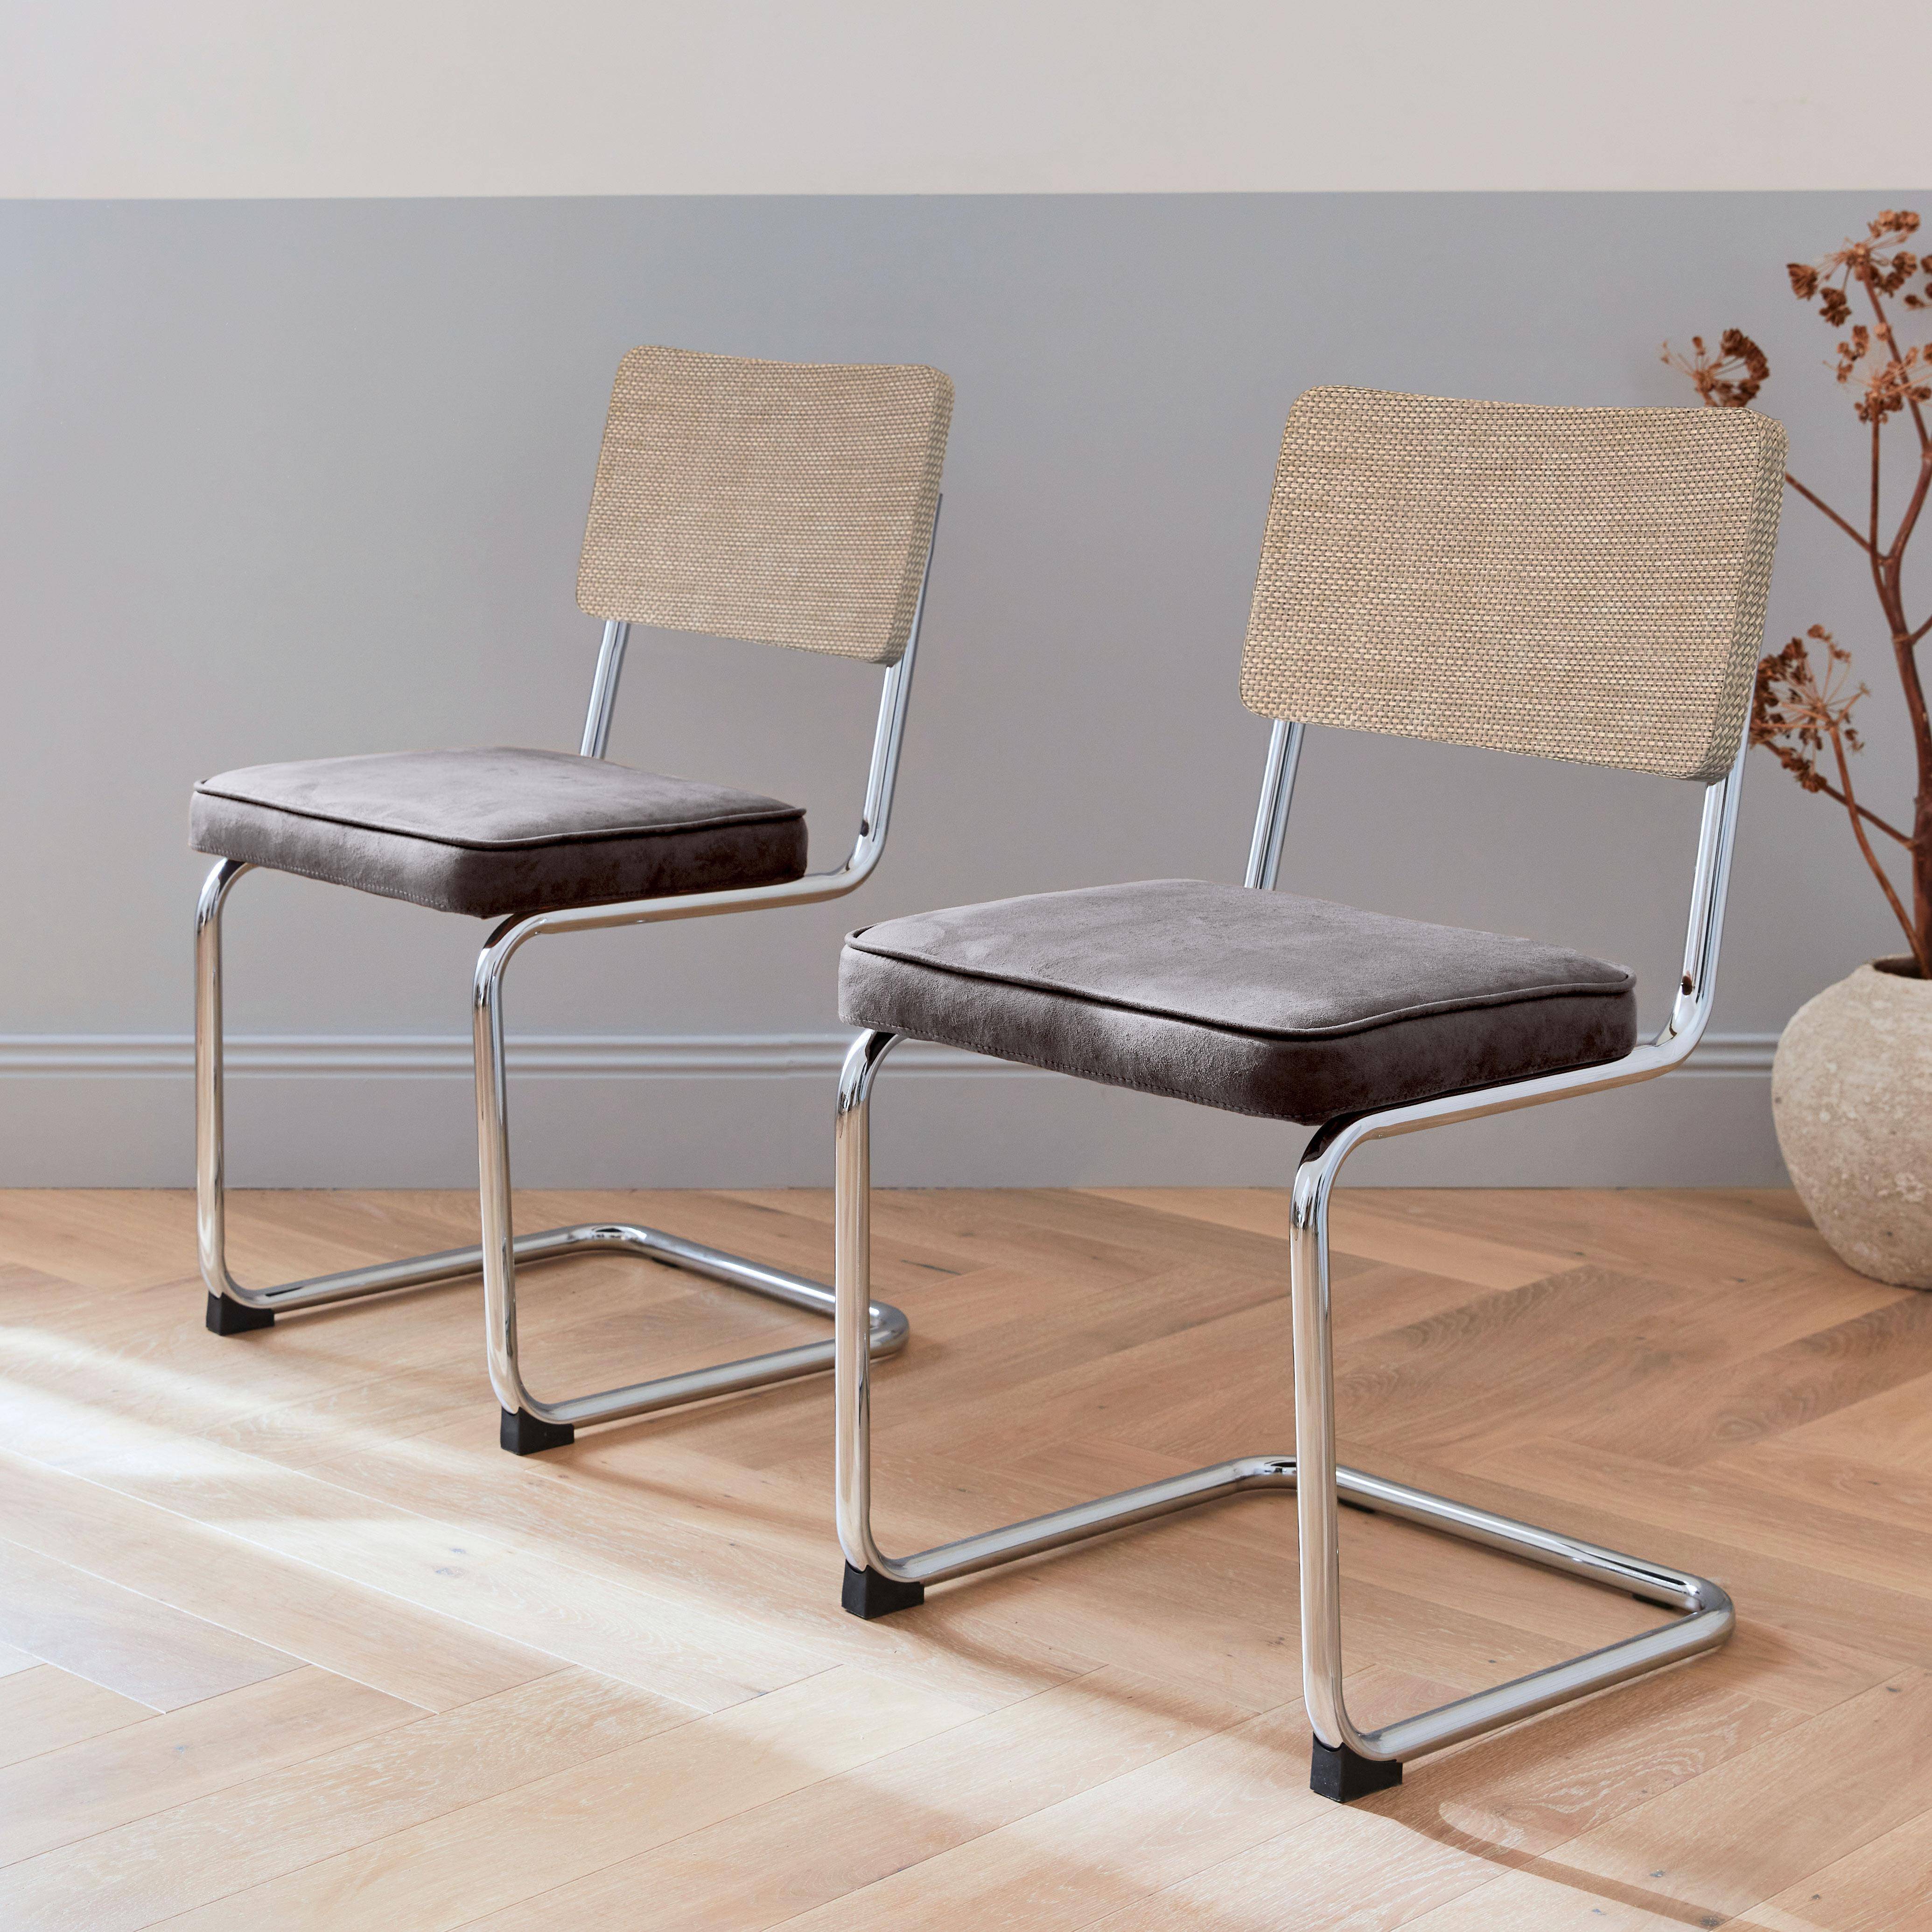 Pair of cantilever cane rattan dining chairs, 46x54.5x84.5cm - Maja - Black,sweeek,Photo1